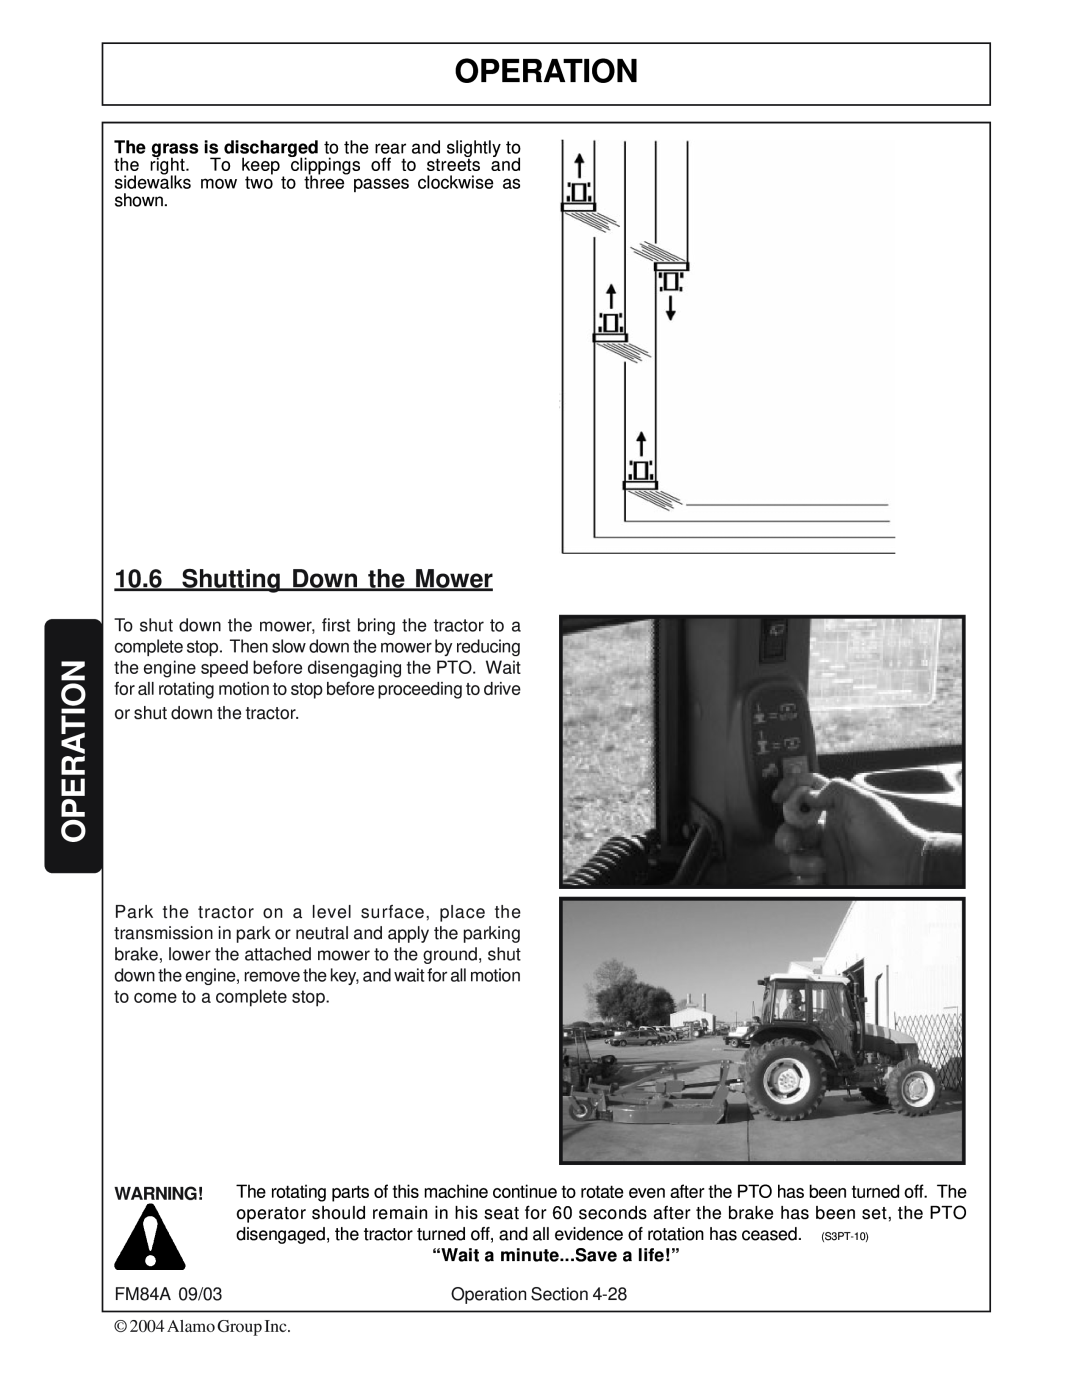 Servis-Rhino FM84A manual Operation, Shutting Down the Mower 